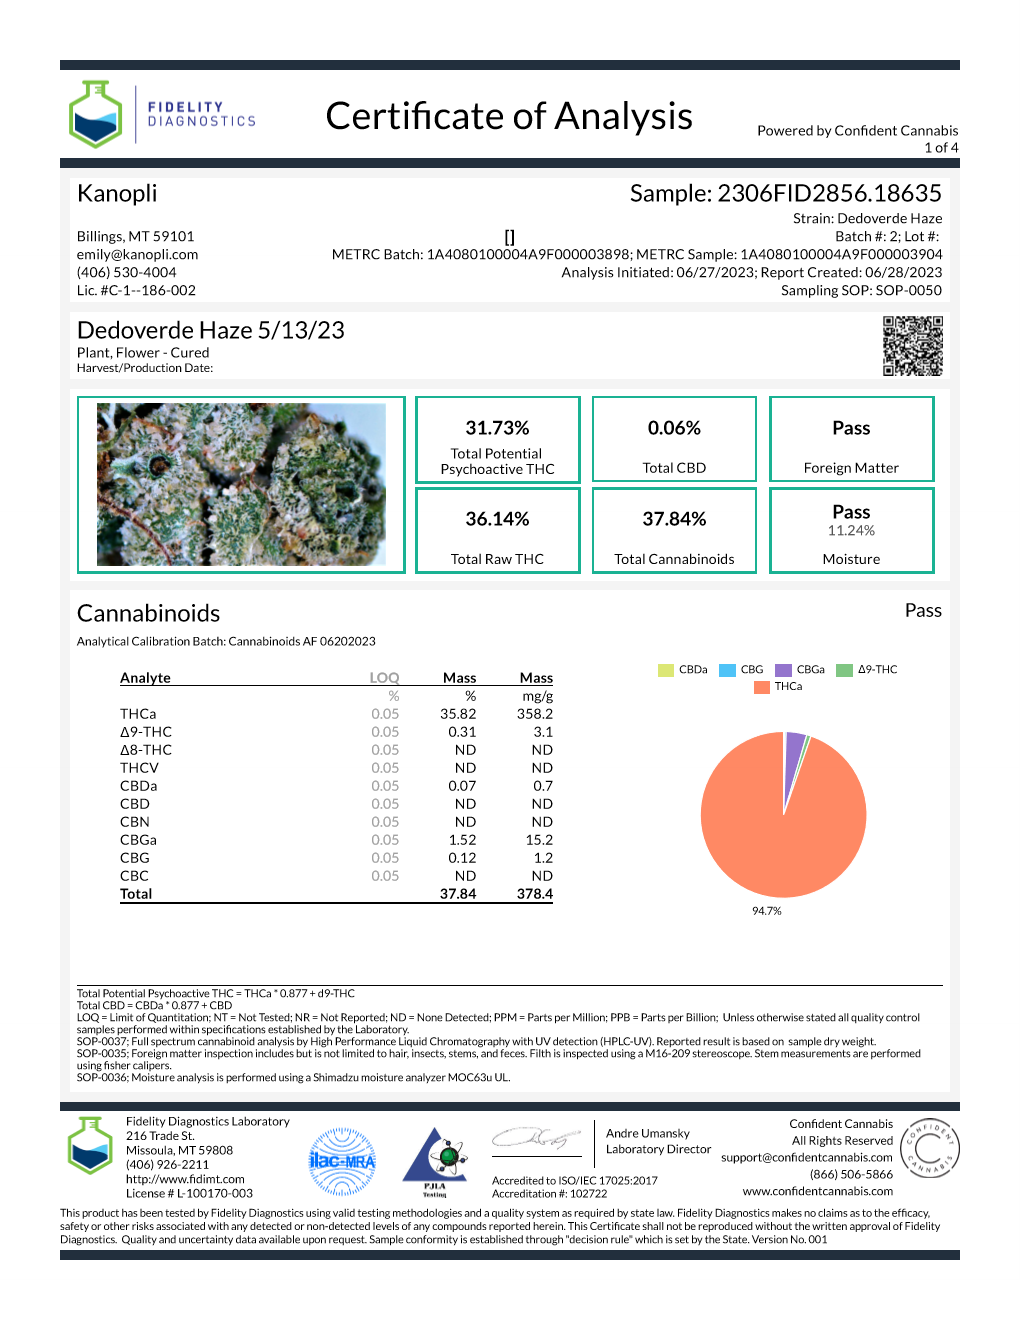 Dedoverde Haze shake (31.73% THC) May 2023